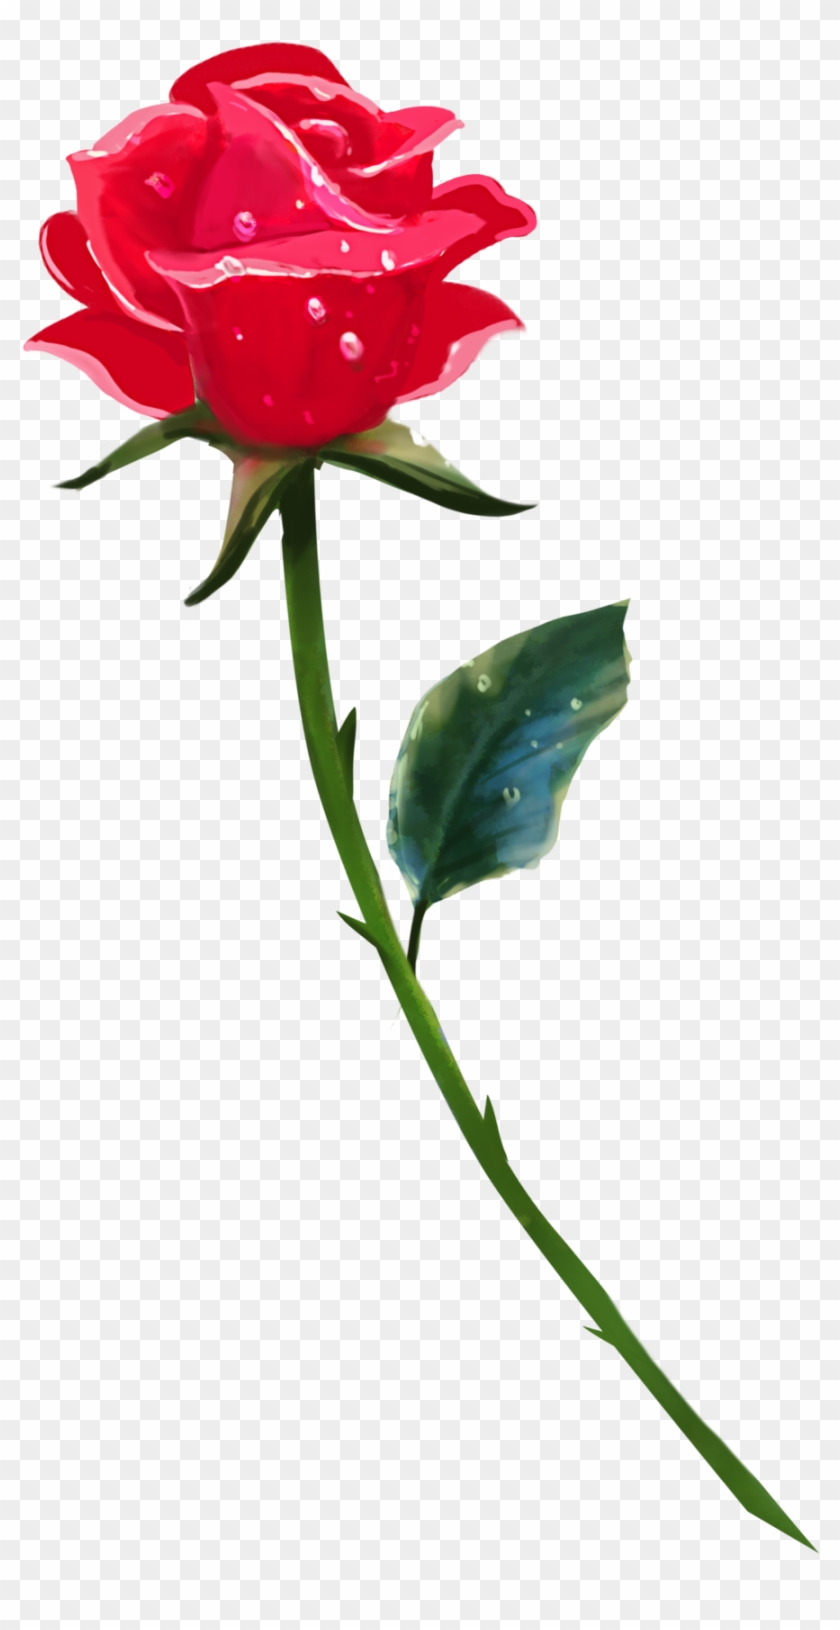 A Single Rose By Brookegillette A Single Rose By Brookegillette - Single Rose Flower Hd Png #479092